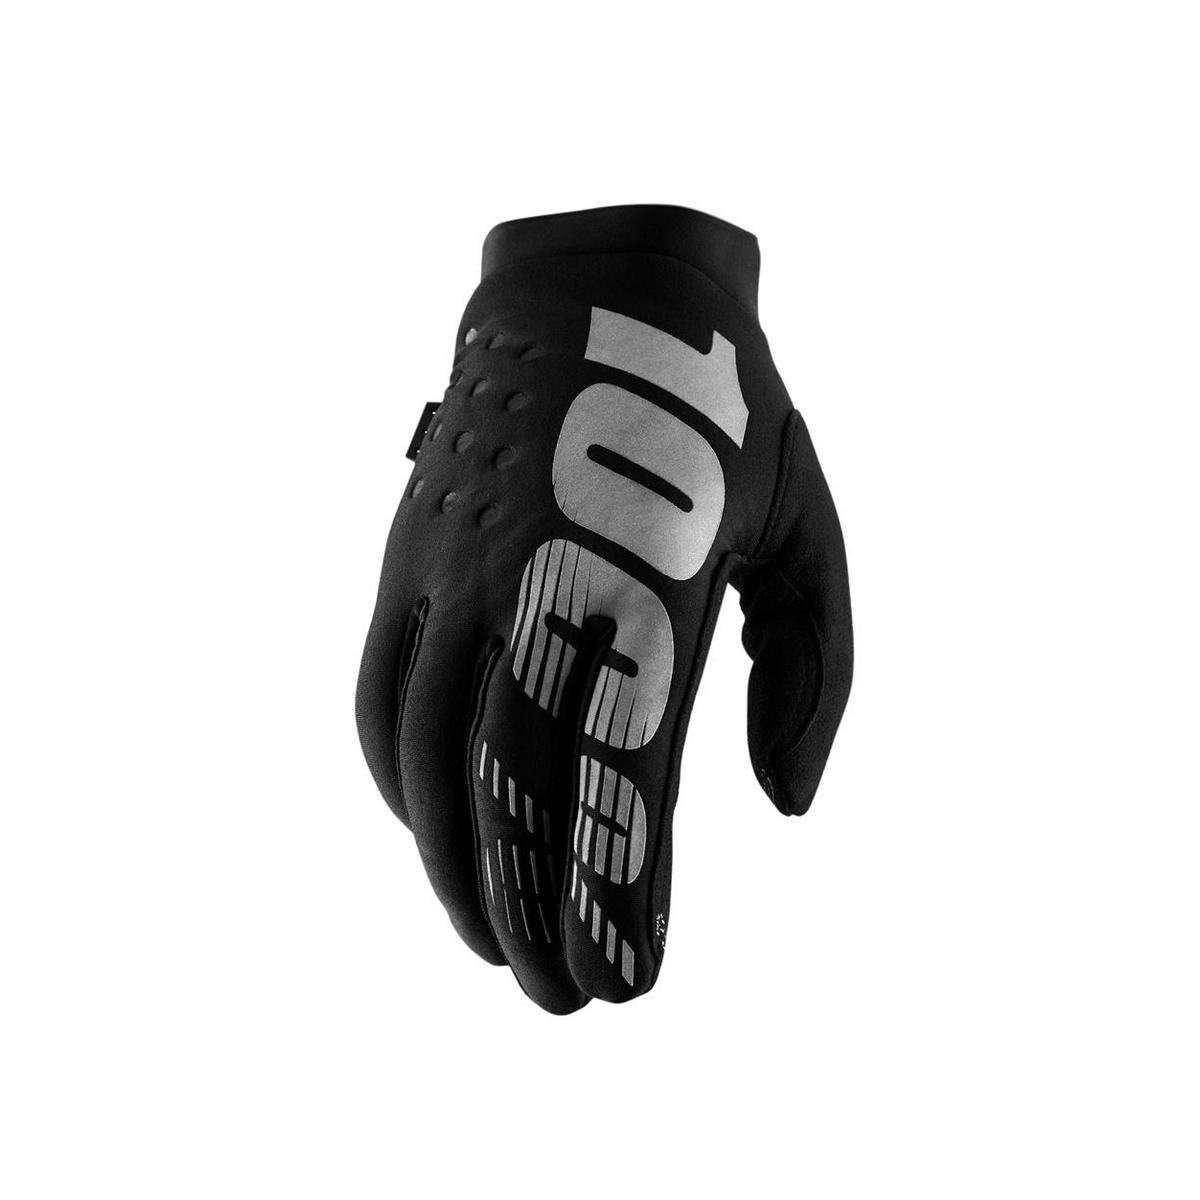 Winter gloves brisker black size S